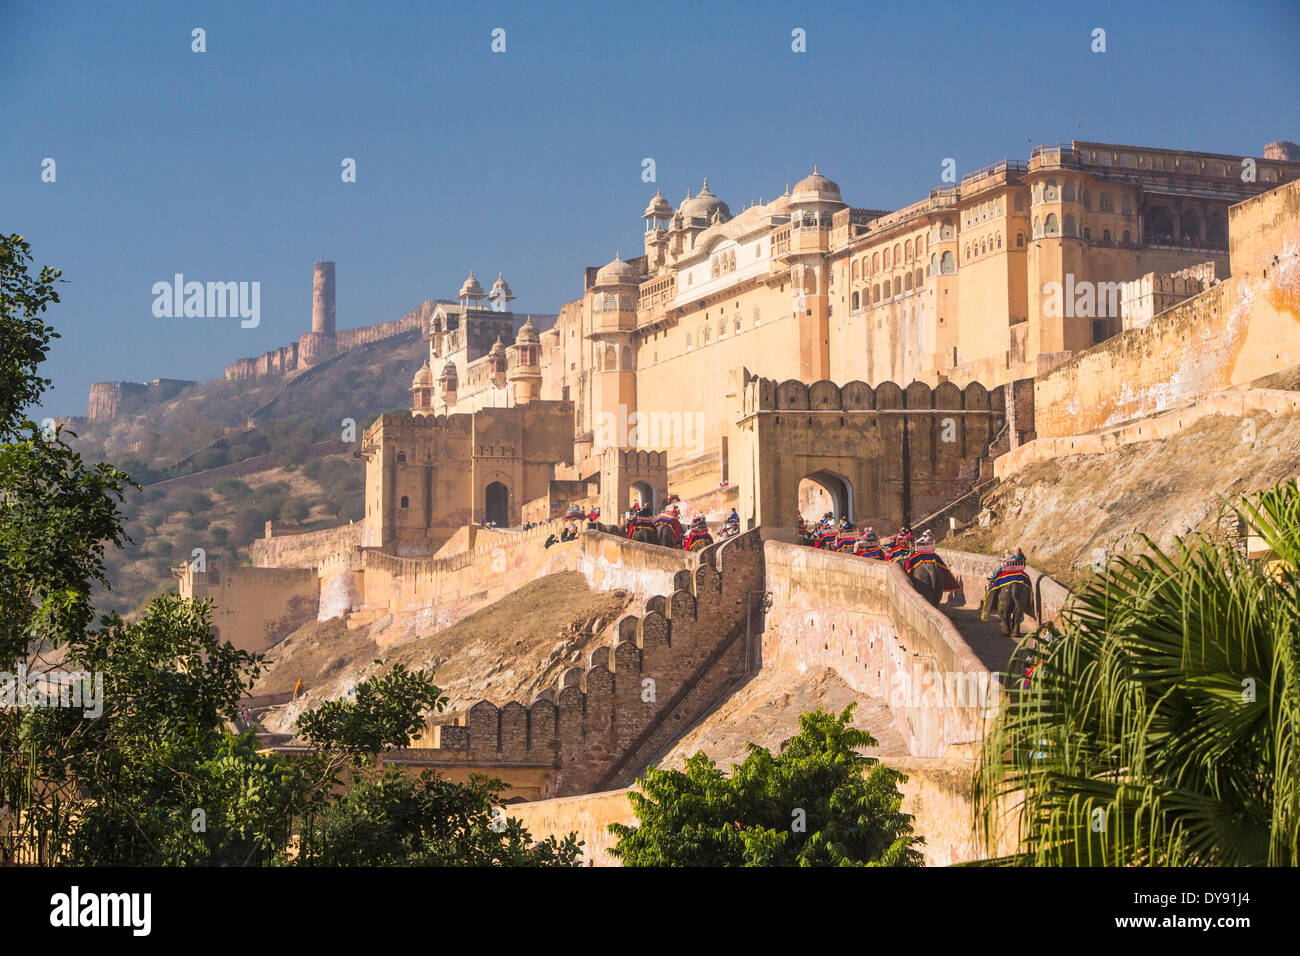 Fort, Amber, Asia, India, palace, Rajasthan, Amber, Jaipur, Stock Photo